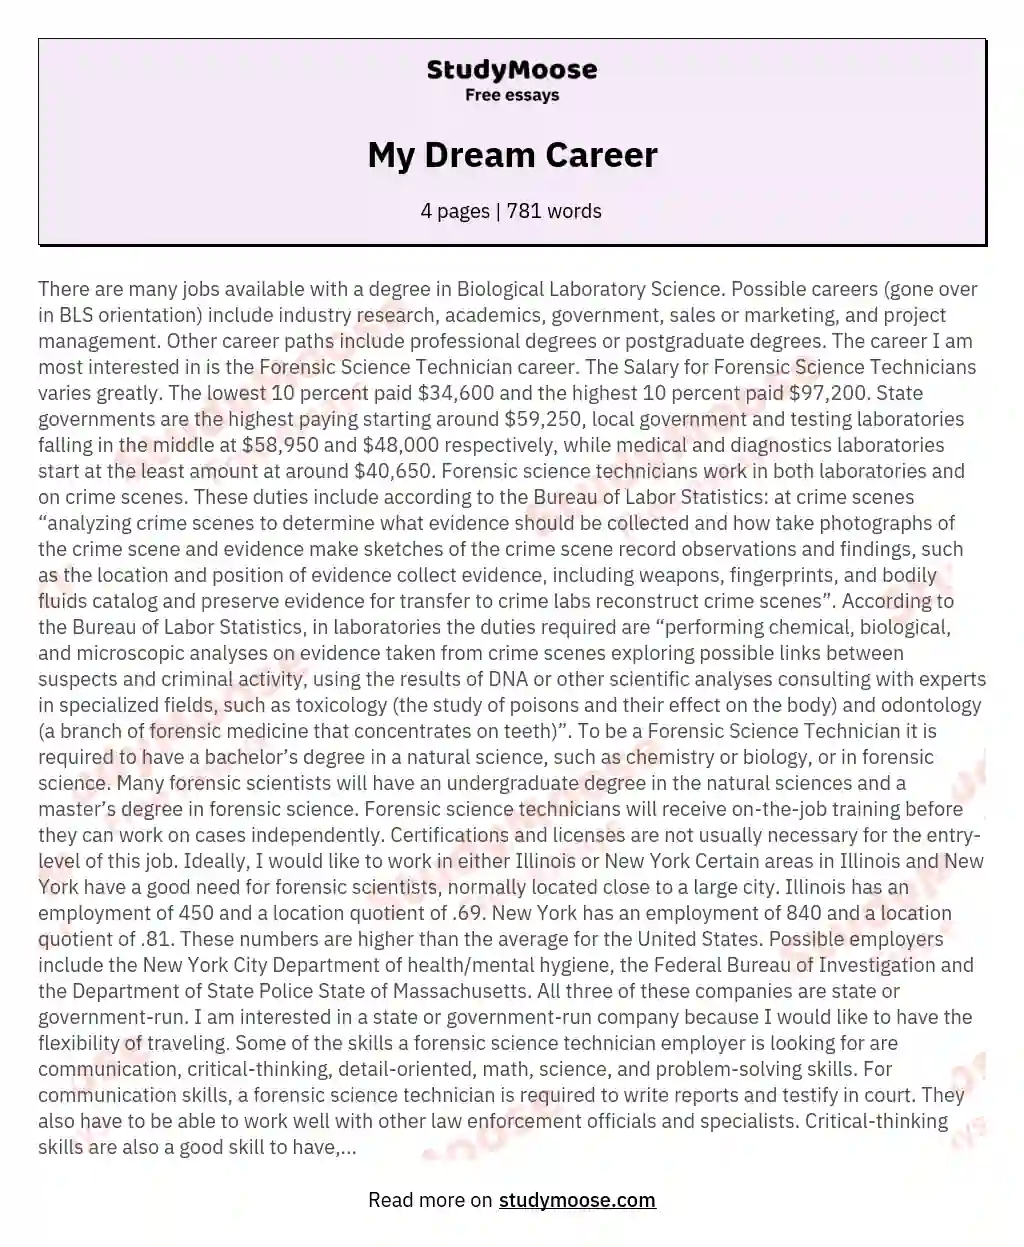 My Dream Career essay